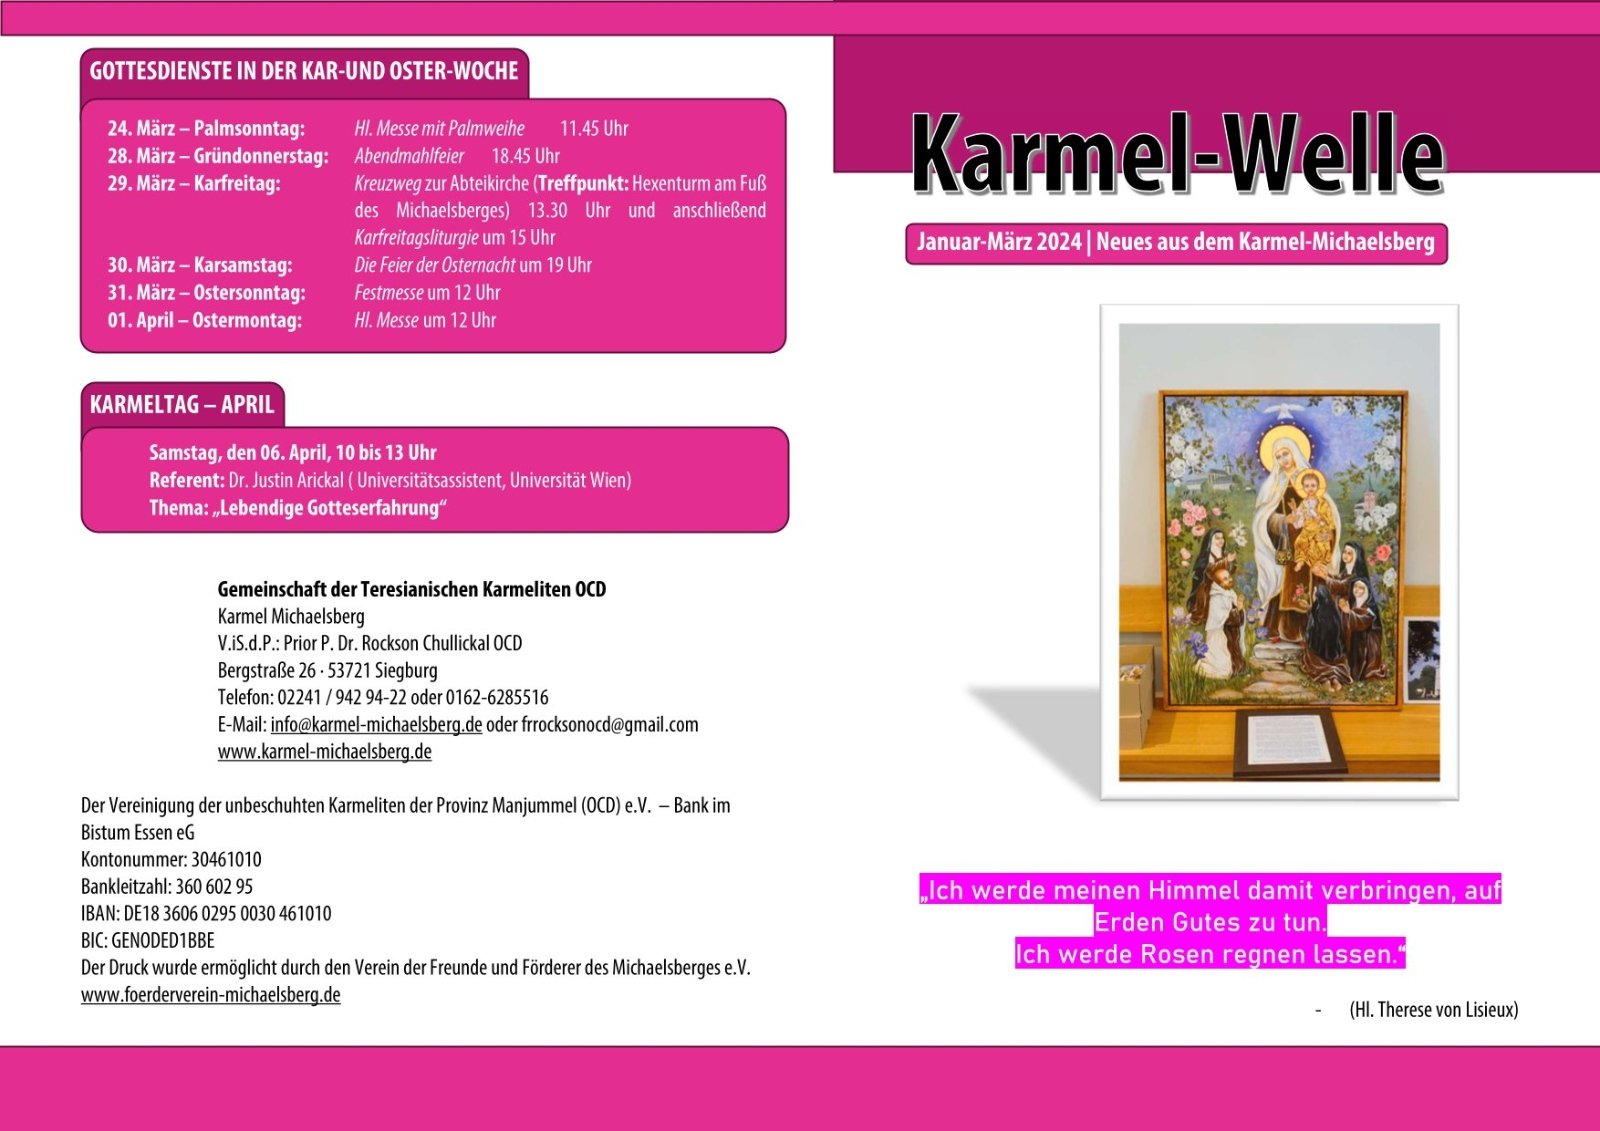 karmel-welle jan-märz 2024 seite 1-1 (c) Karmel Michaelsberg